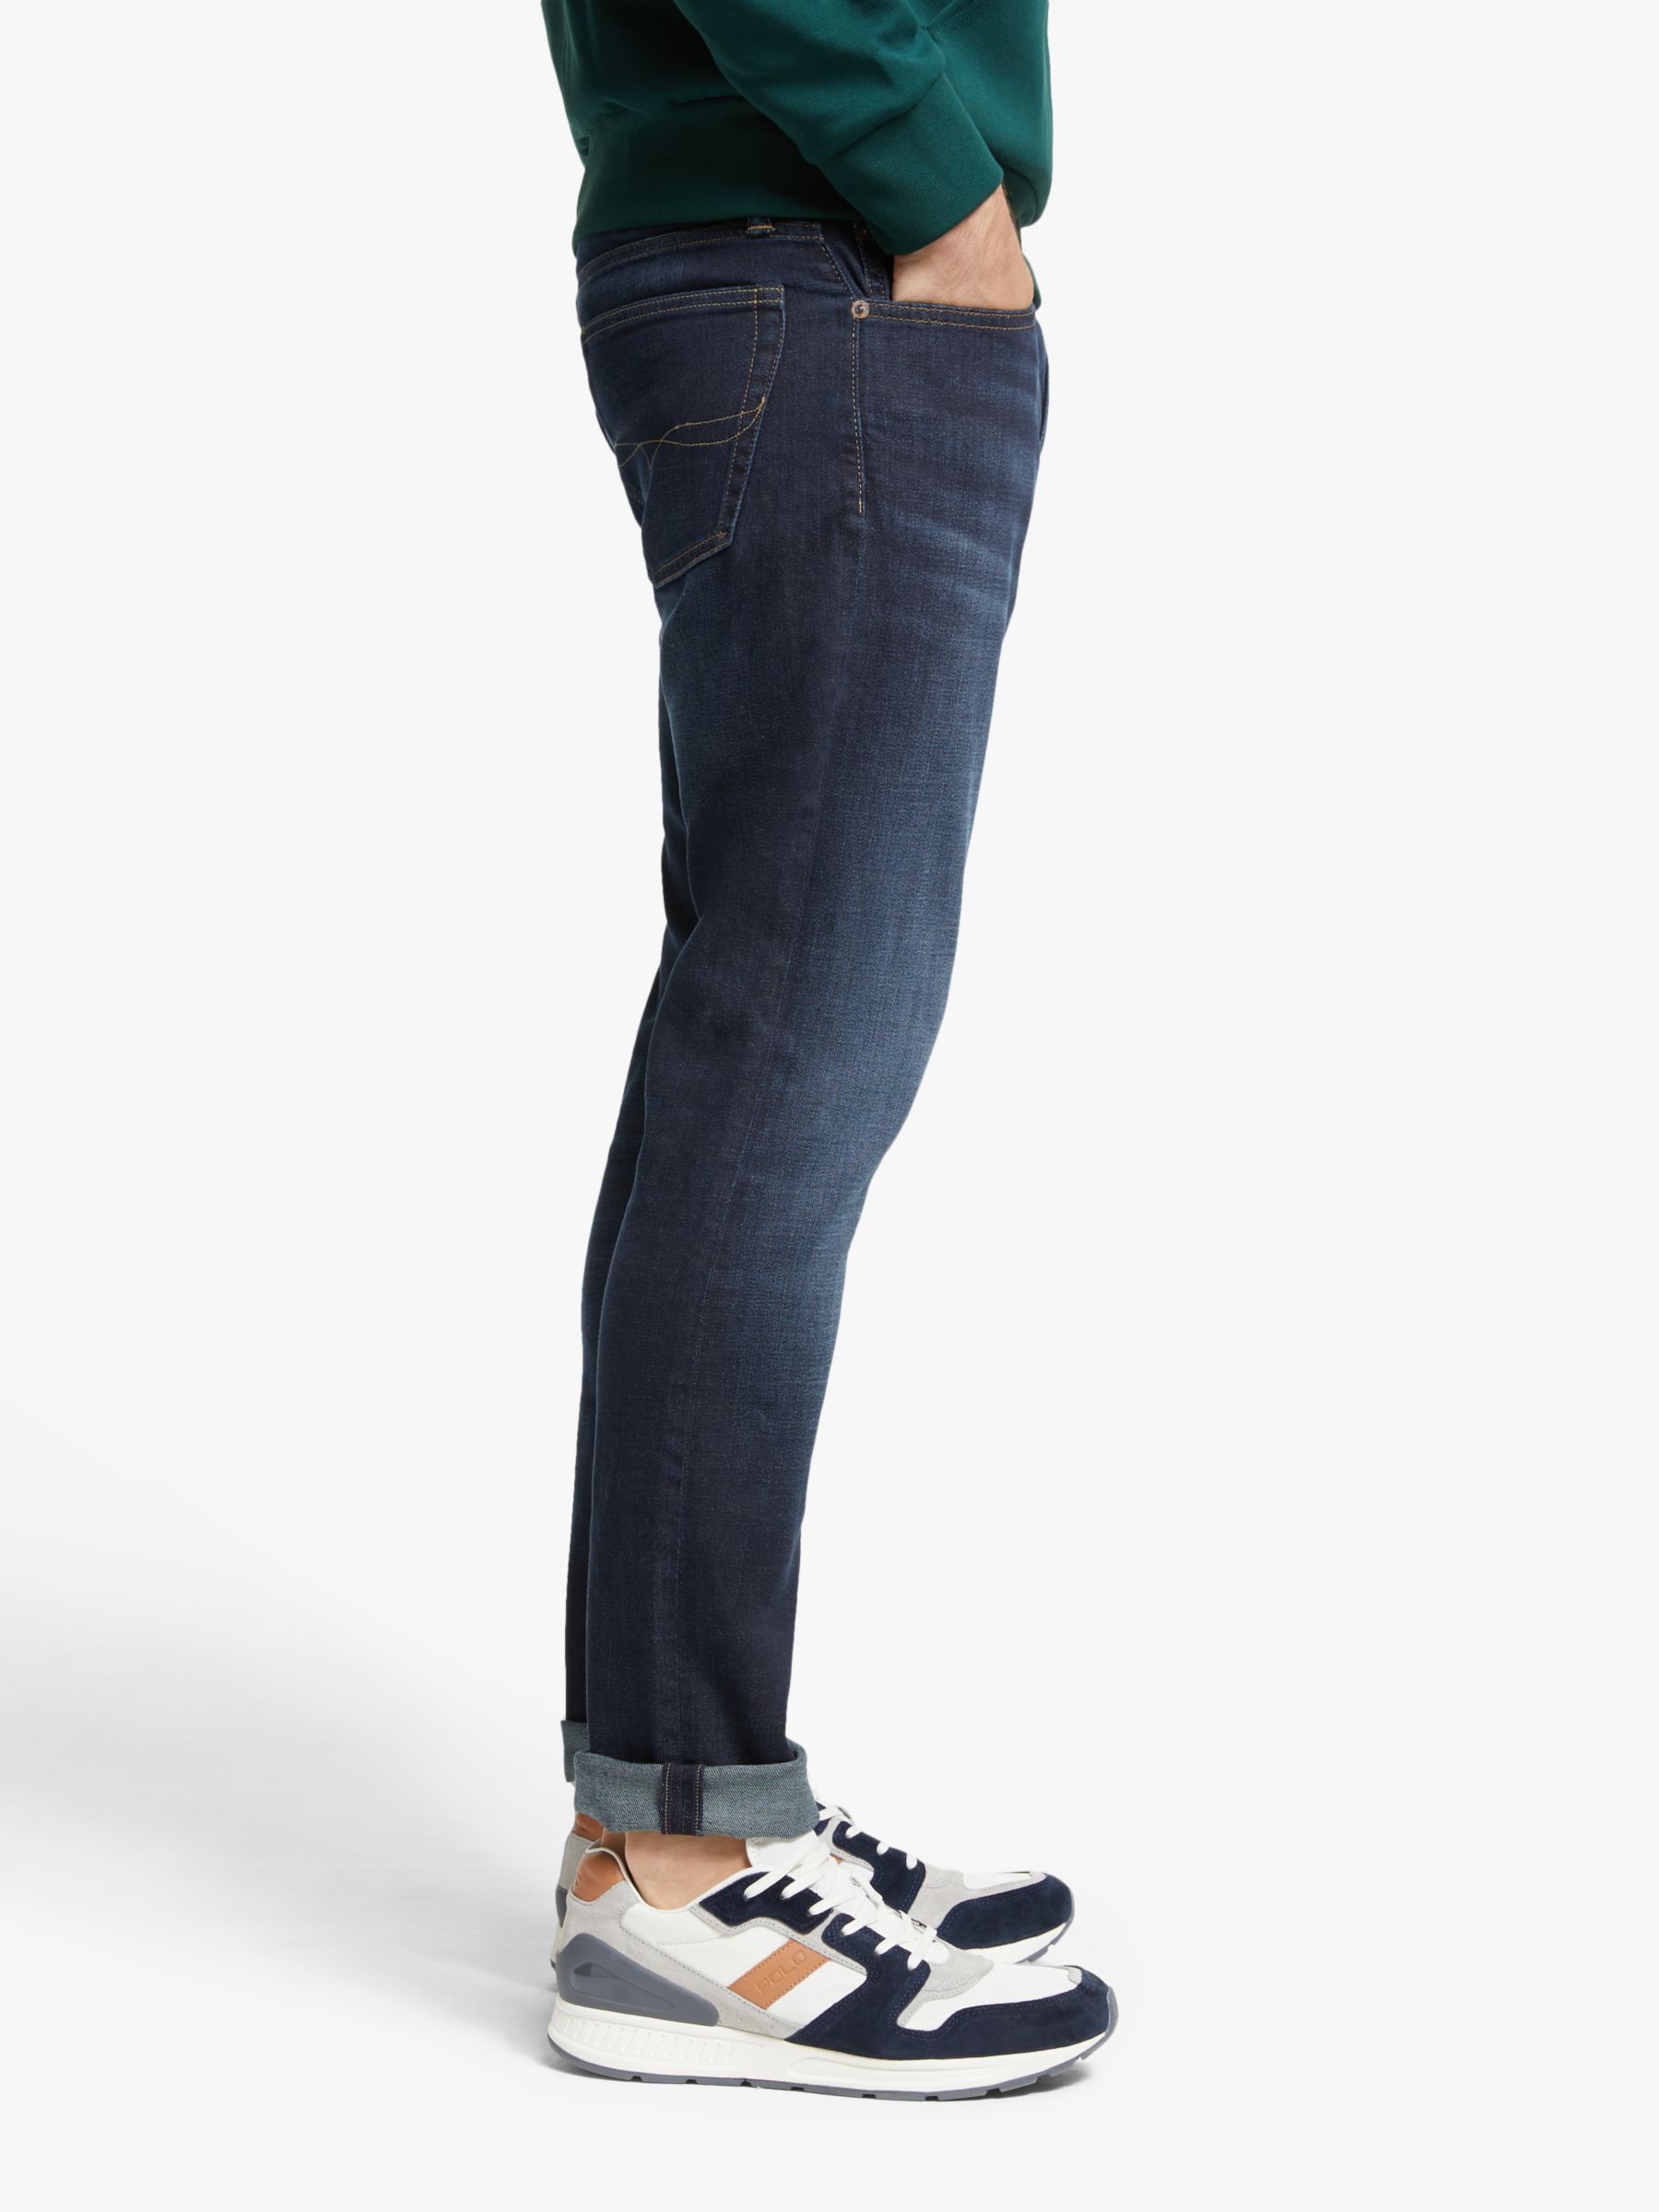 Polo Ralph Lauren Sullivan Slim Stretch Jeans, Murphy Stretch, 30S